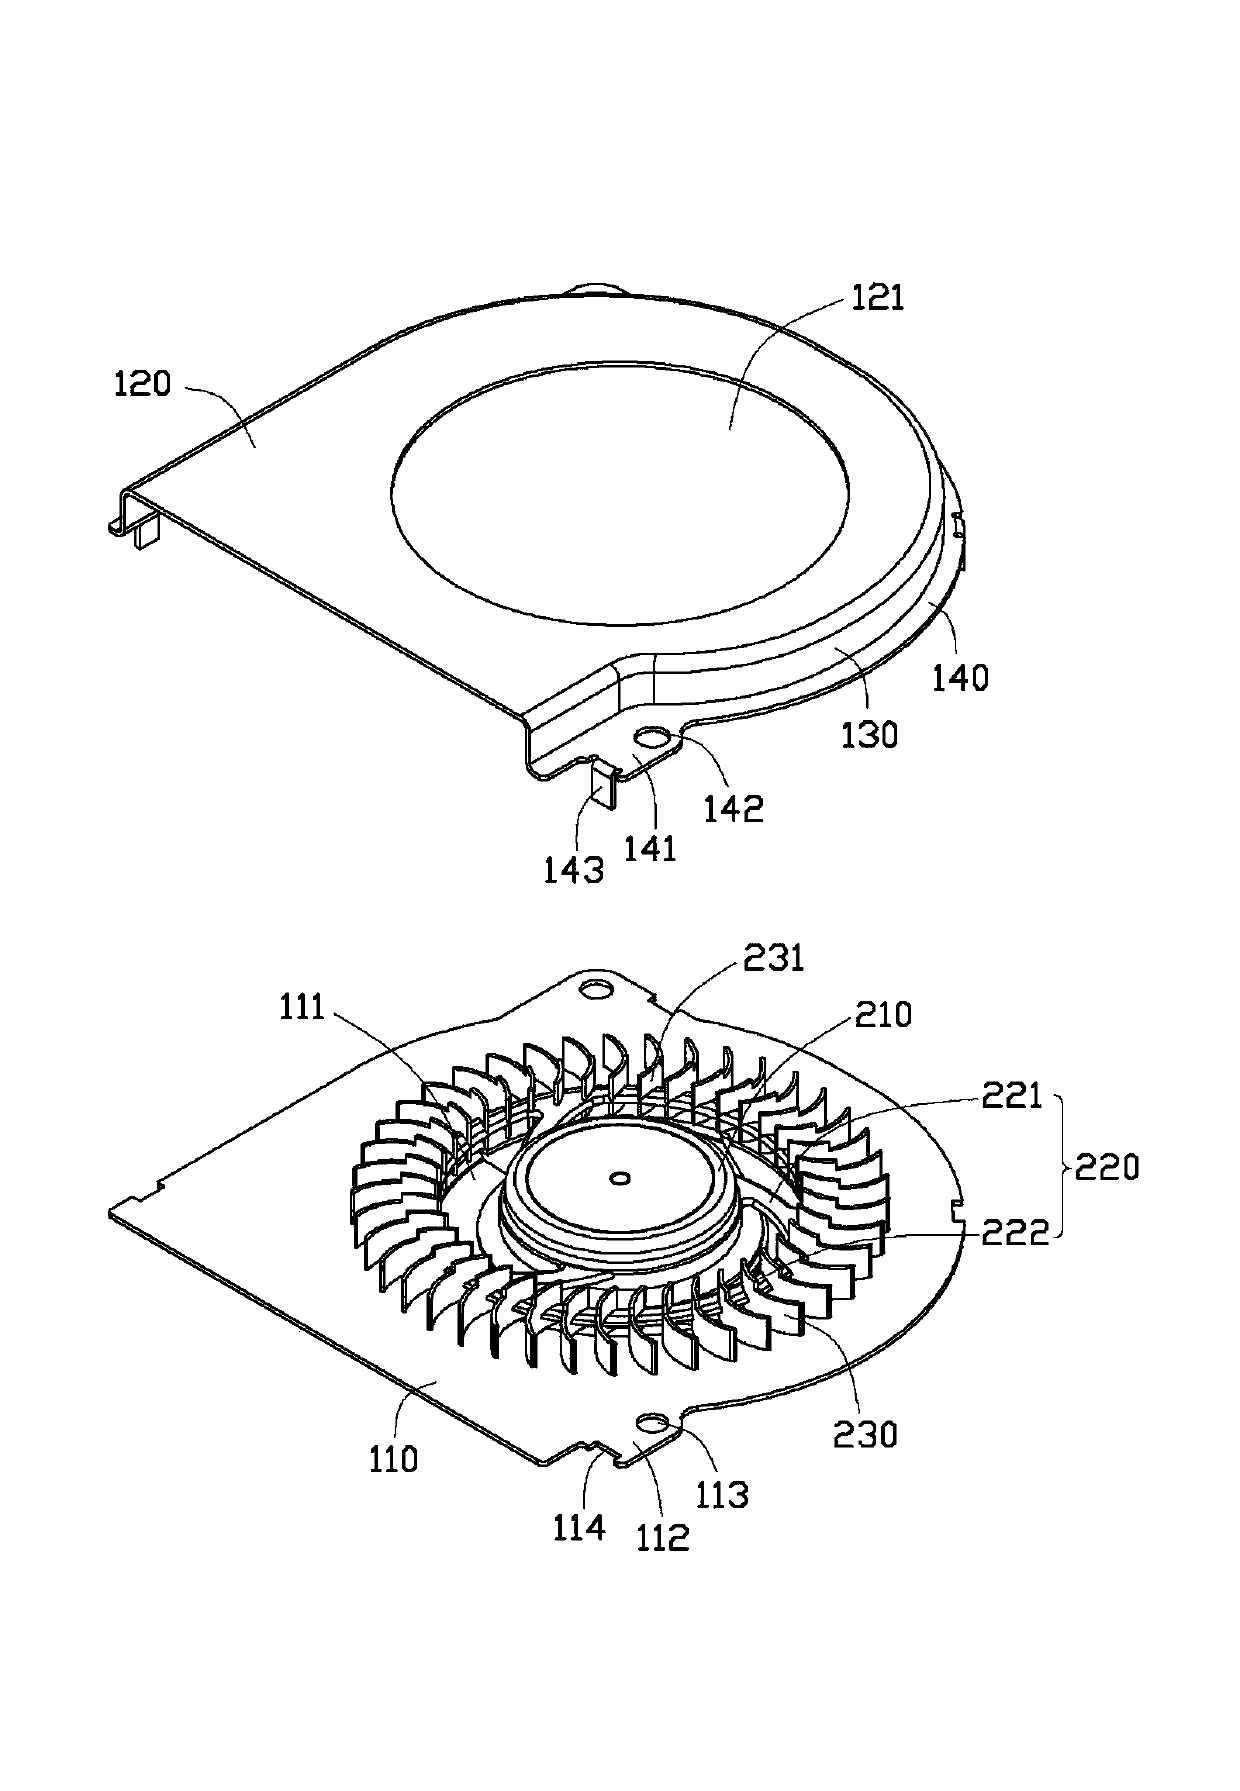 Fan blade producing method and fan device